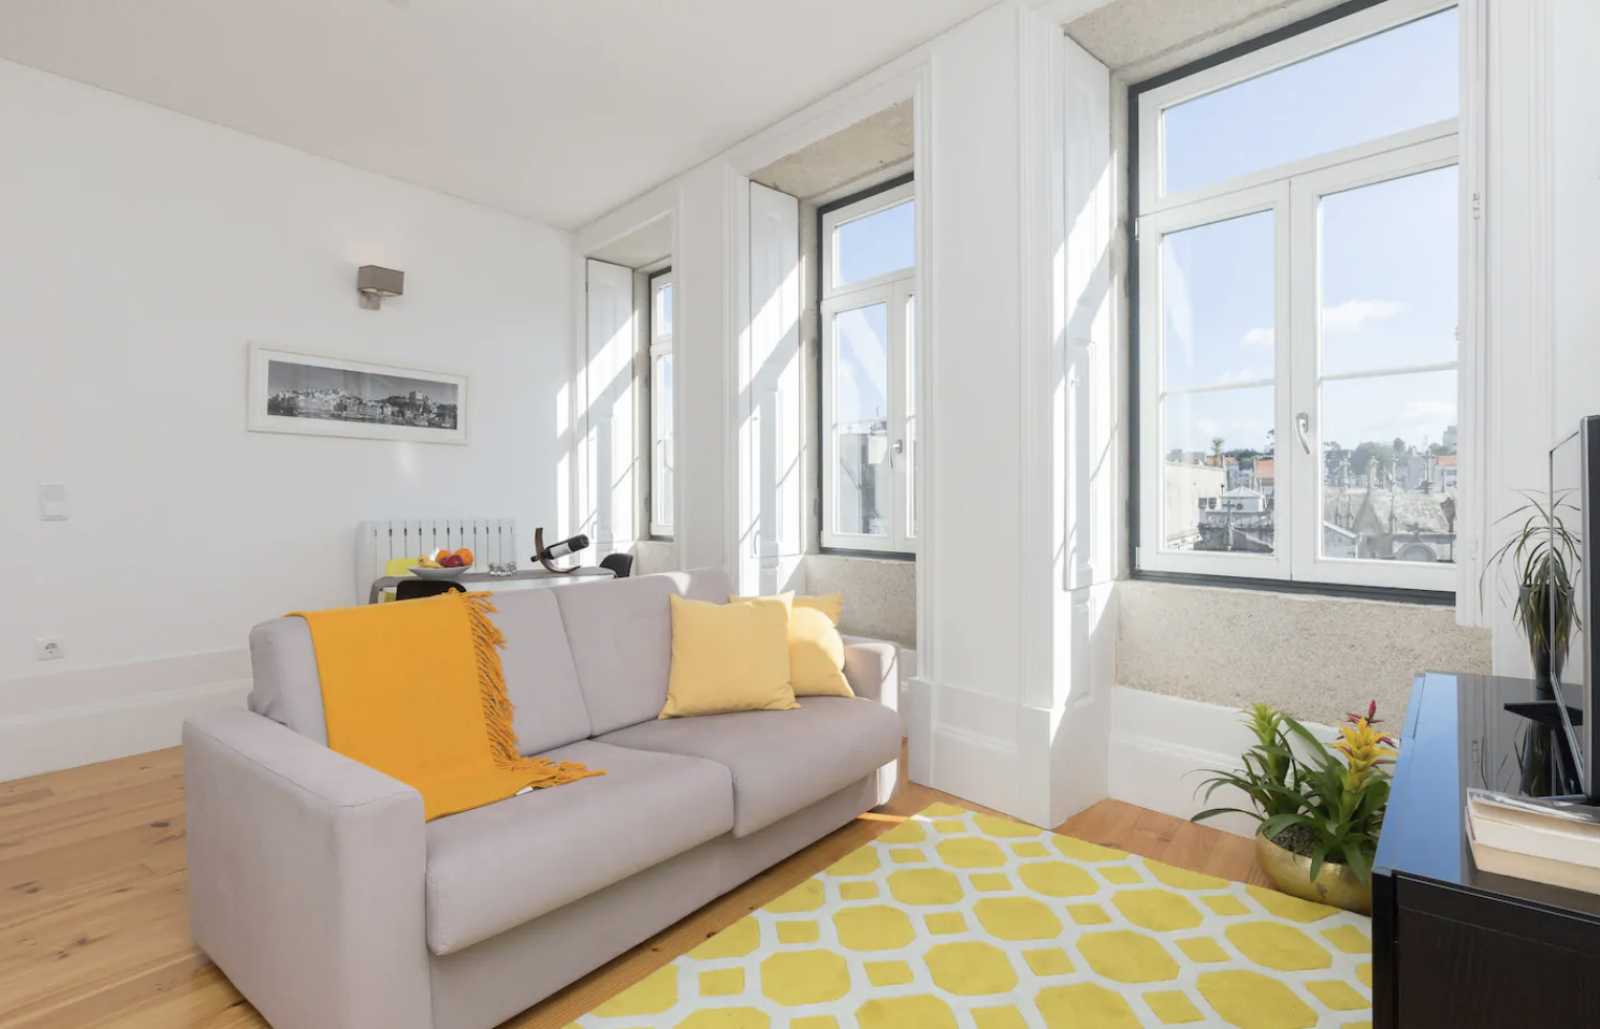 Apartamento colorido deslumbrante iluminado pelo sol por Host Wise 